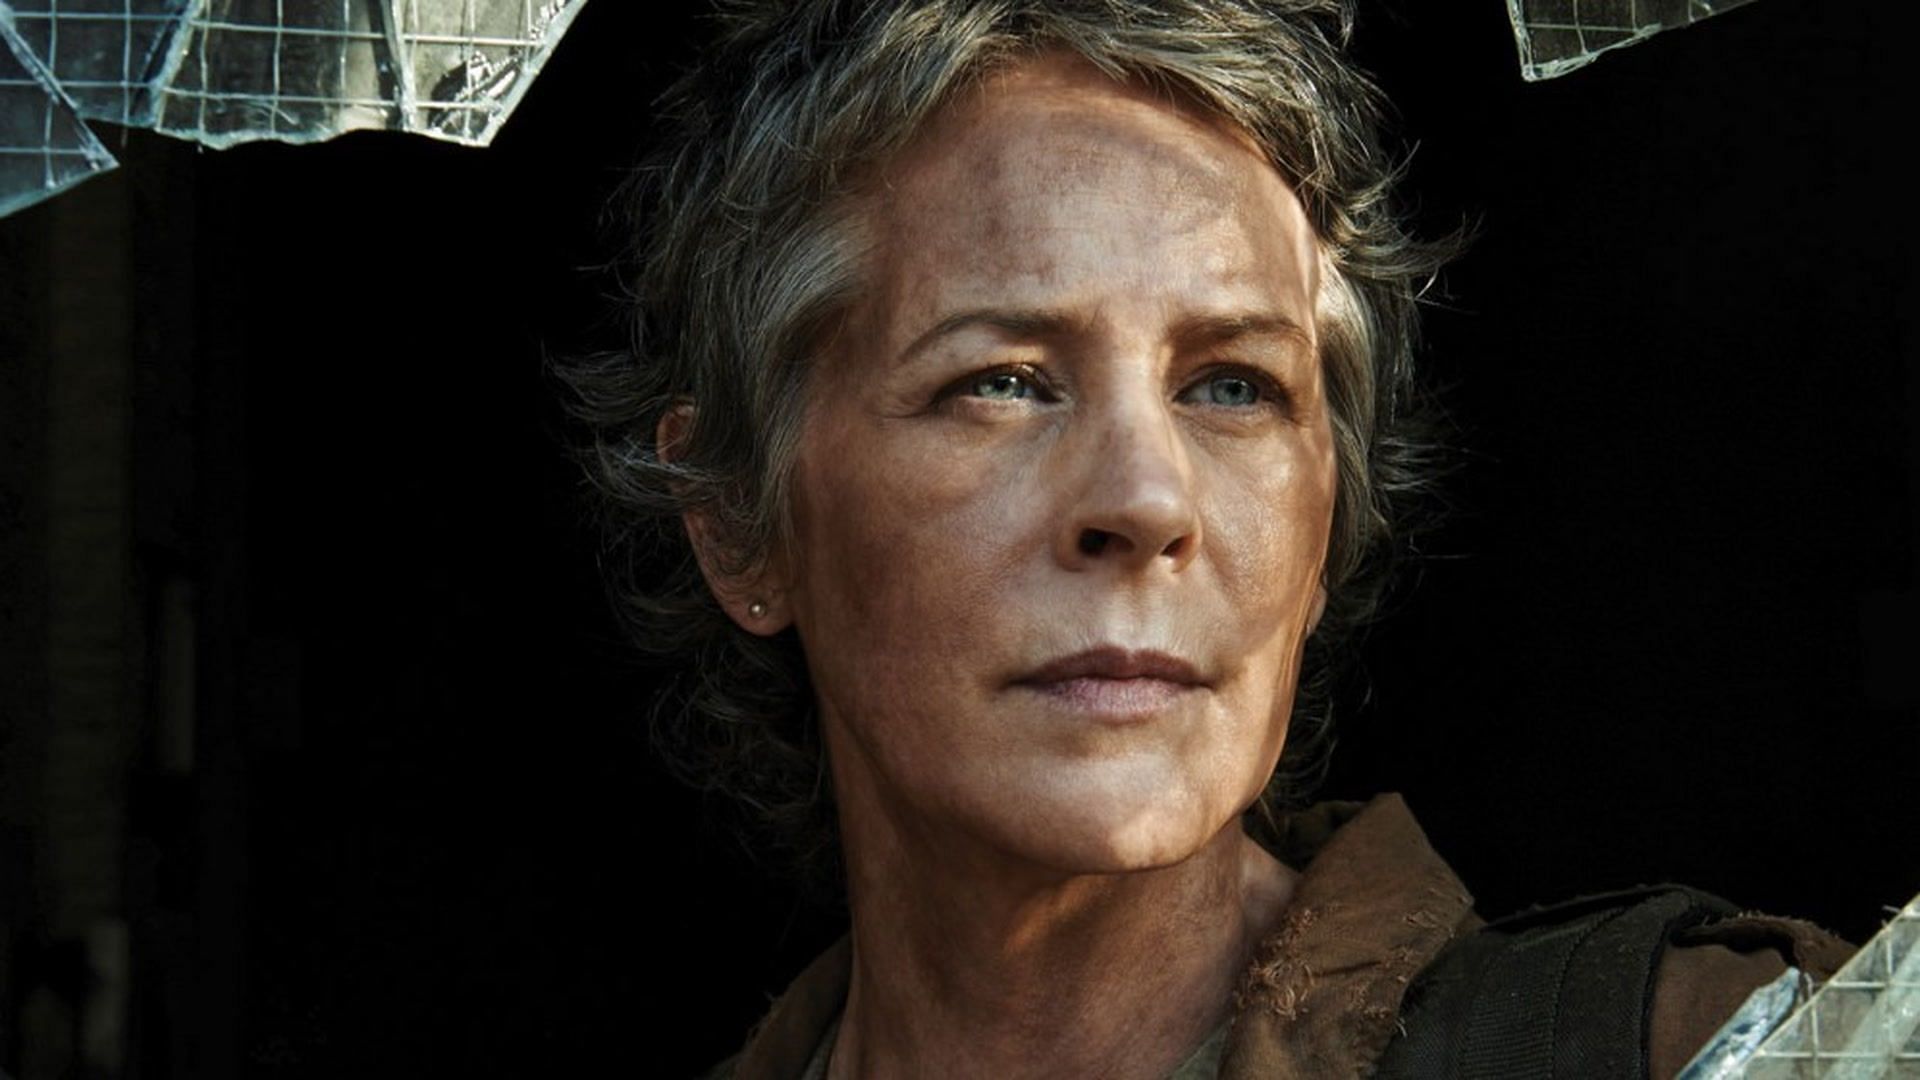  A still from The Walking Dead (Image via AMC)